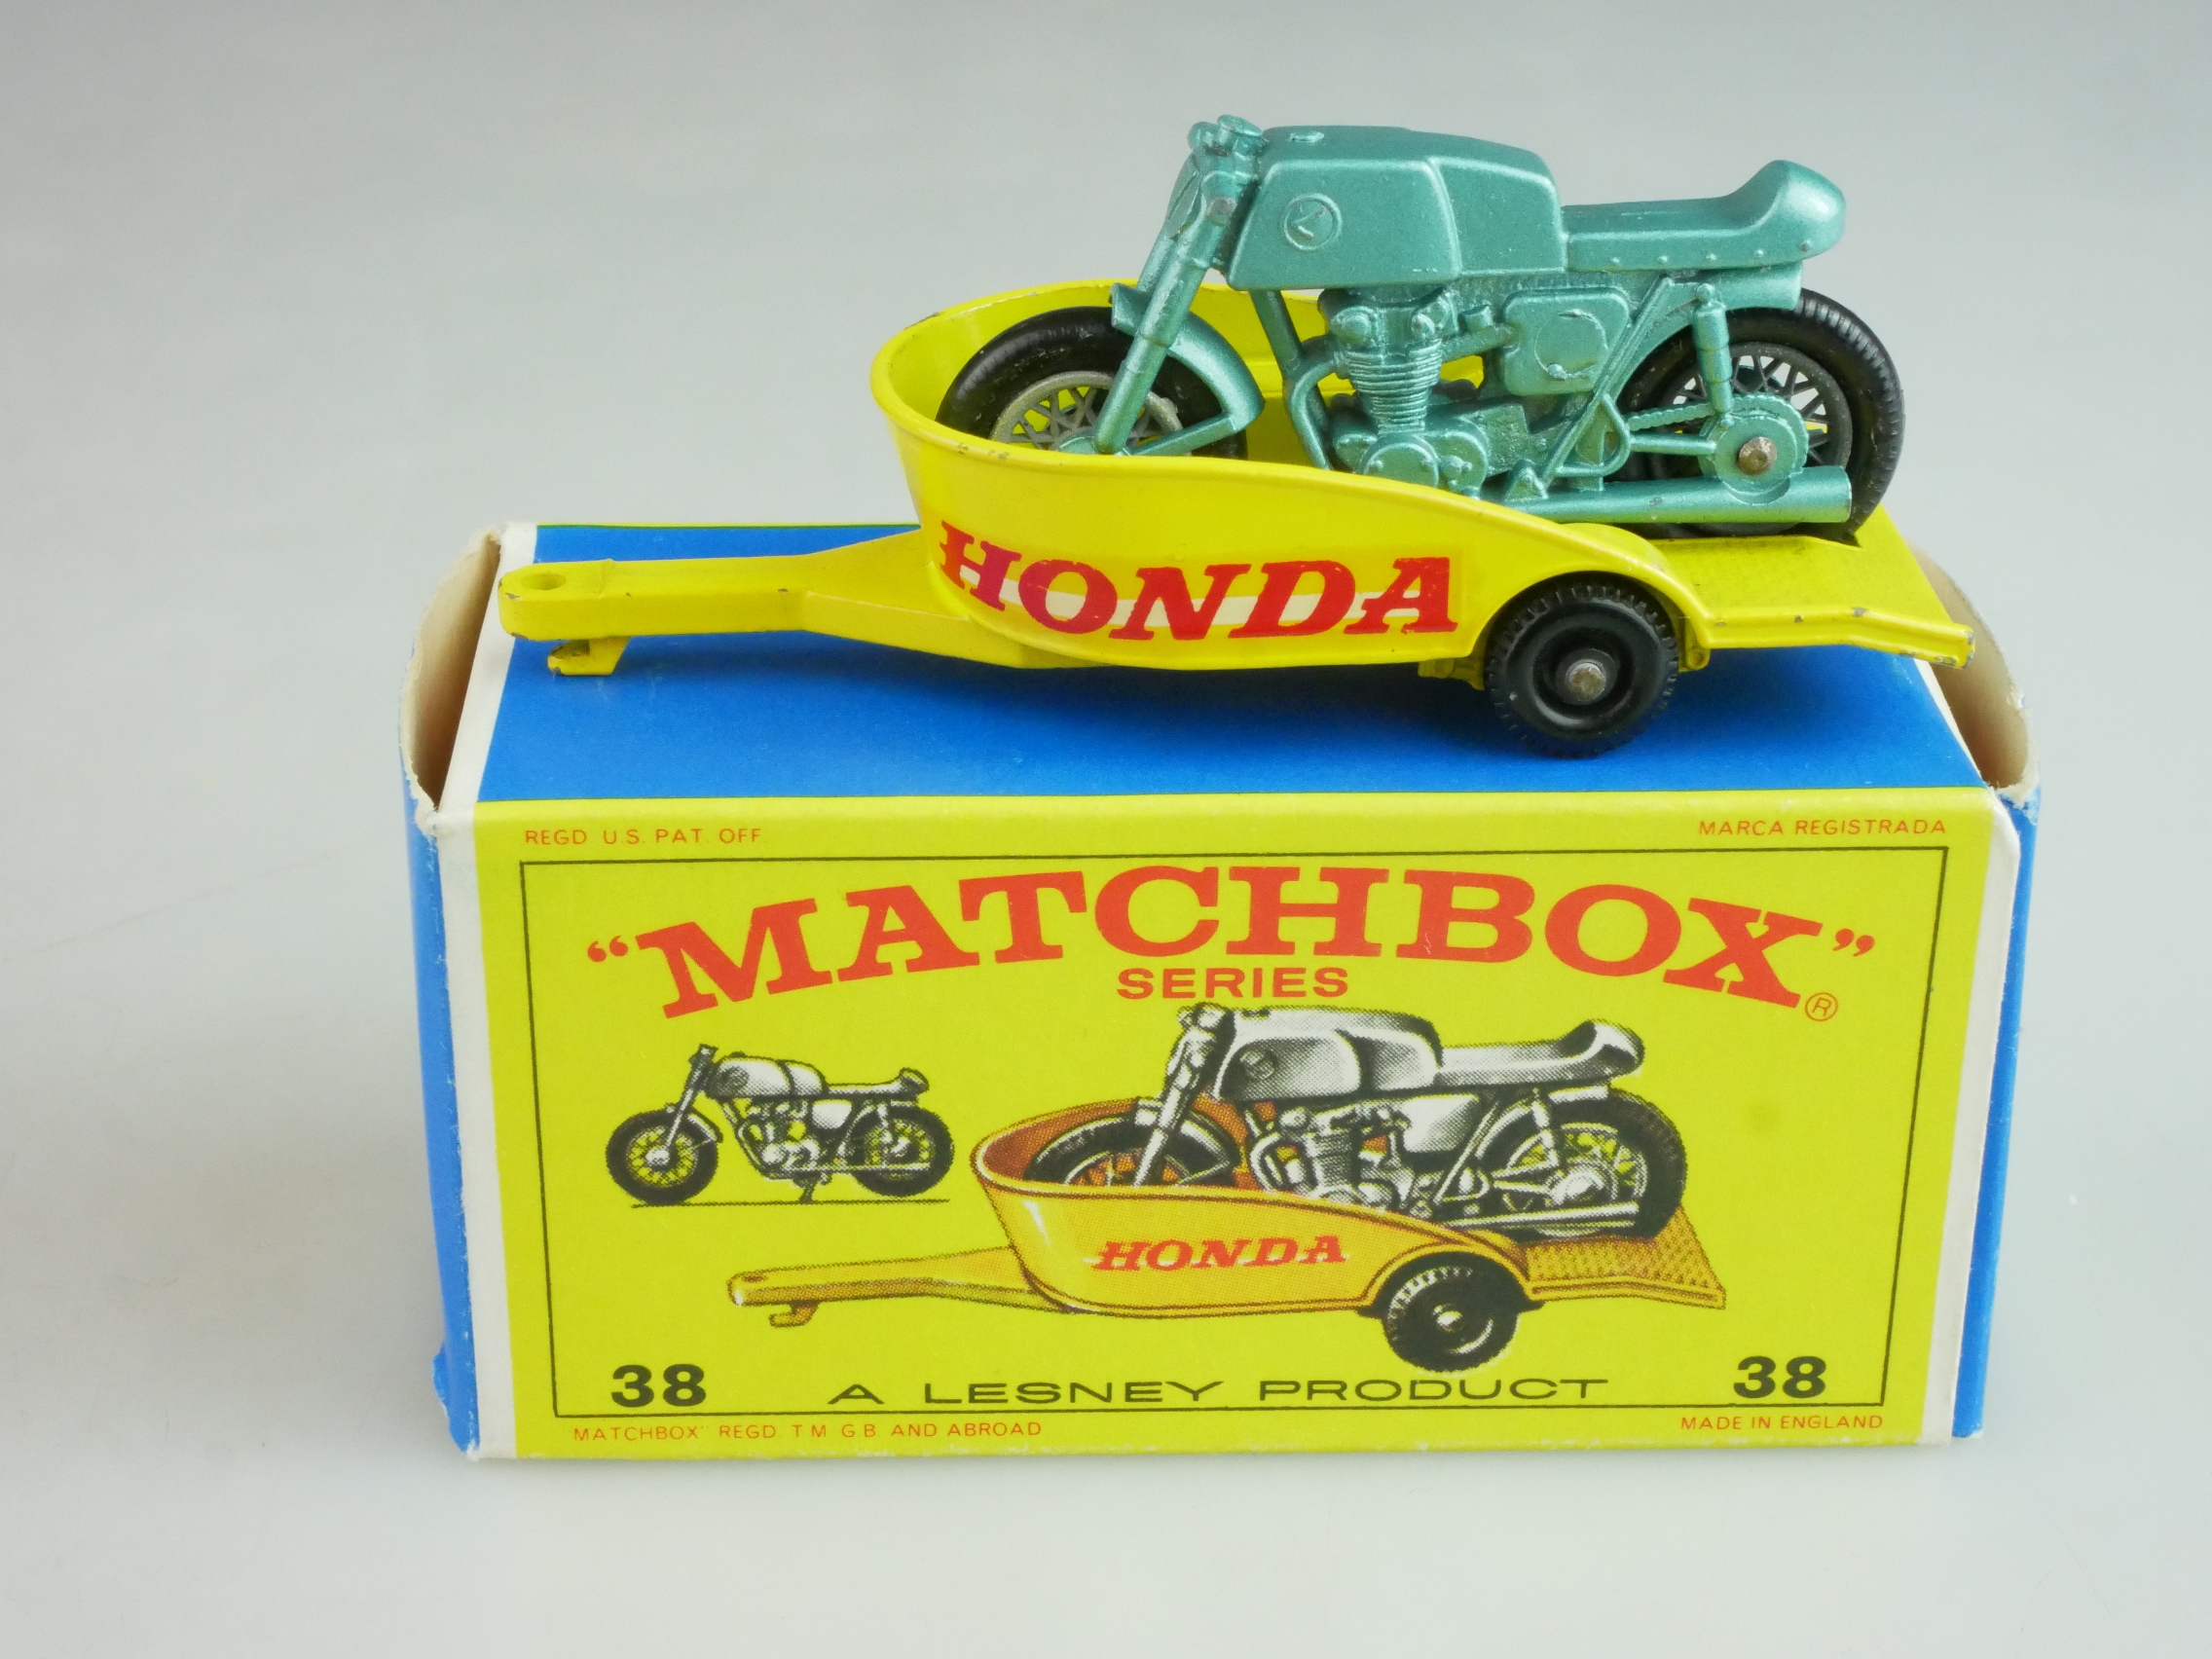 38c Honda Motorcycle & Trailer - 30281